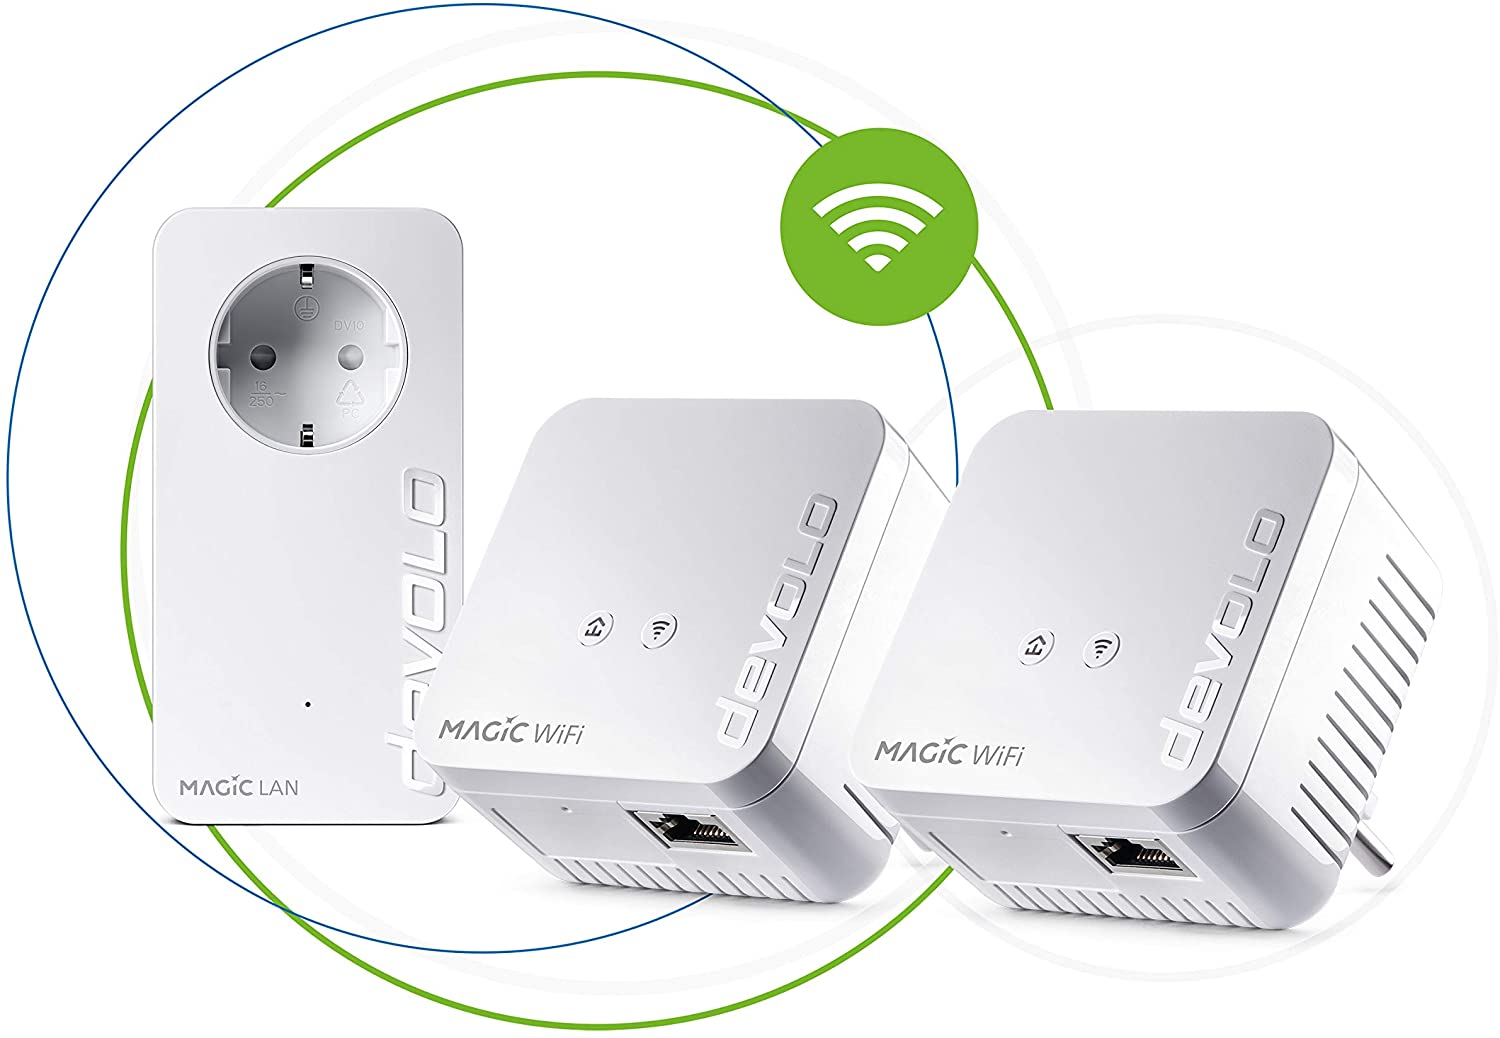 devolo Magic 1 Wi-Fi mini: Compact multiroom kit for reliable room-spanning WLAN via power line